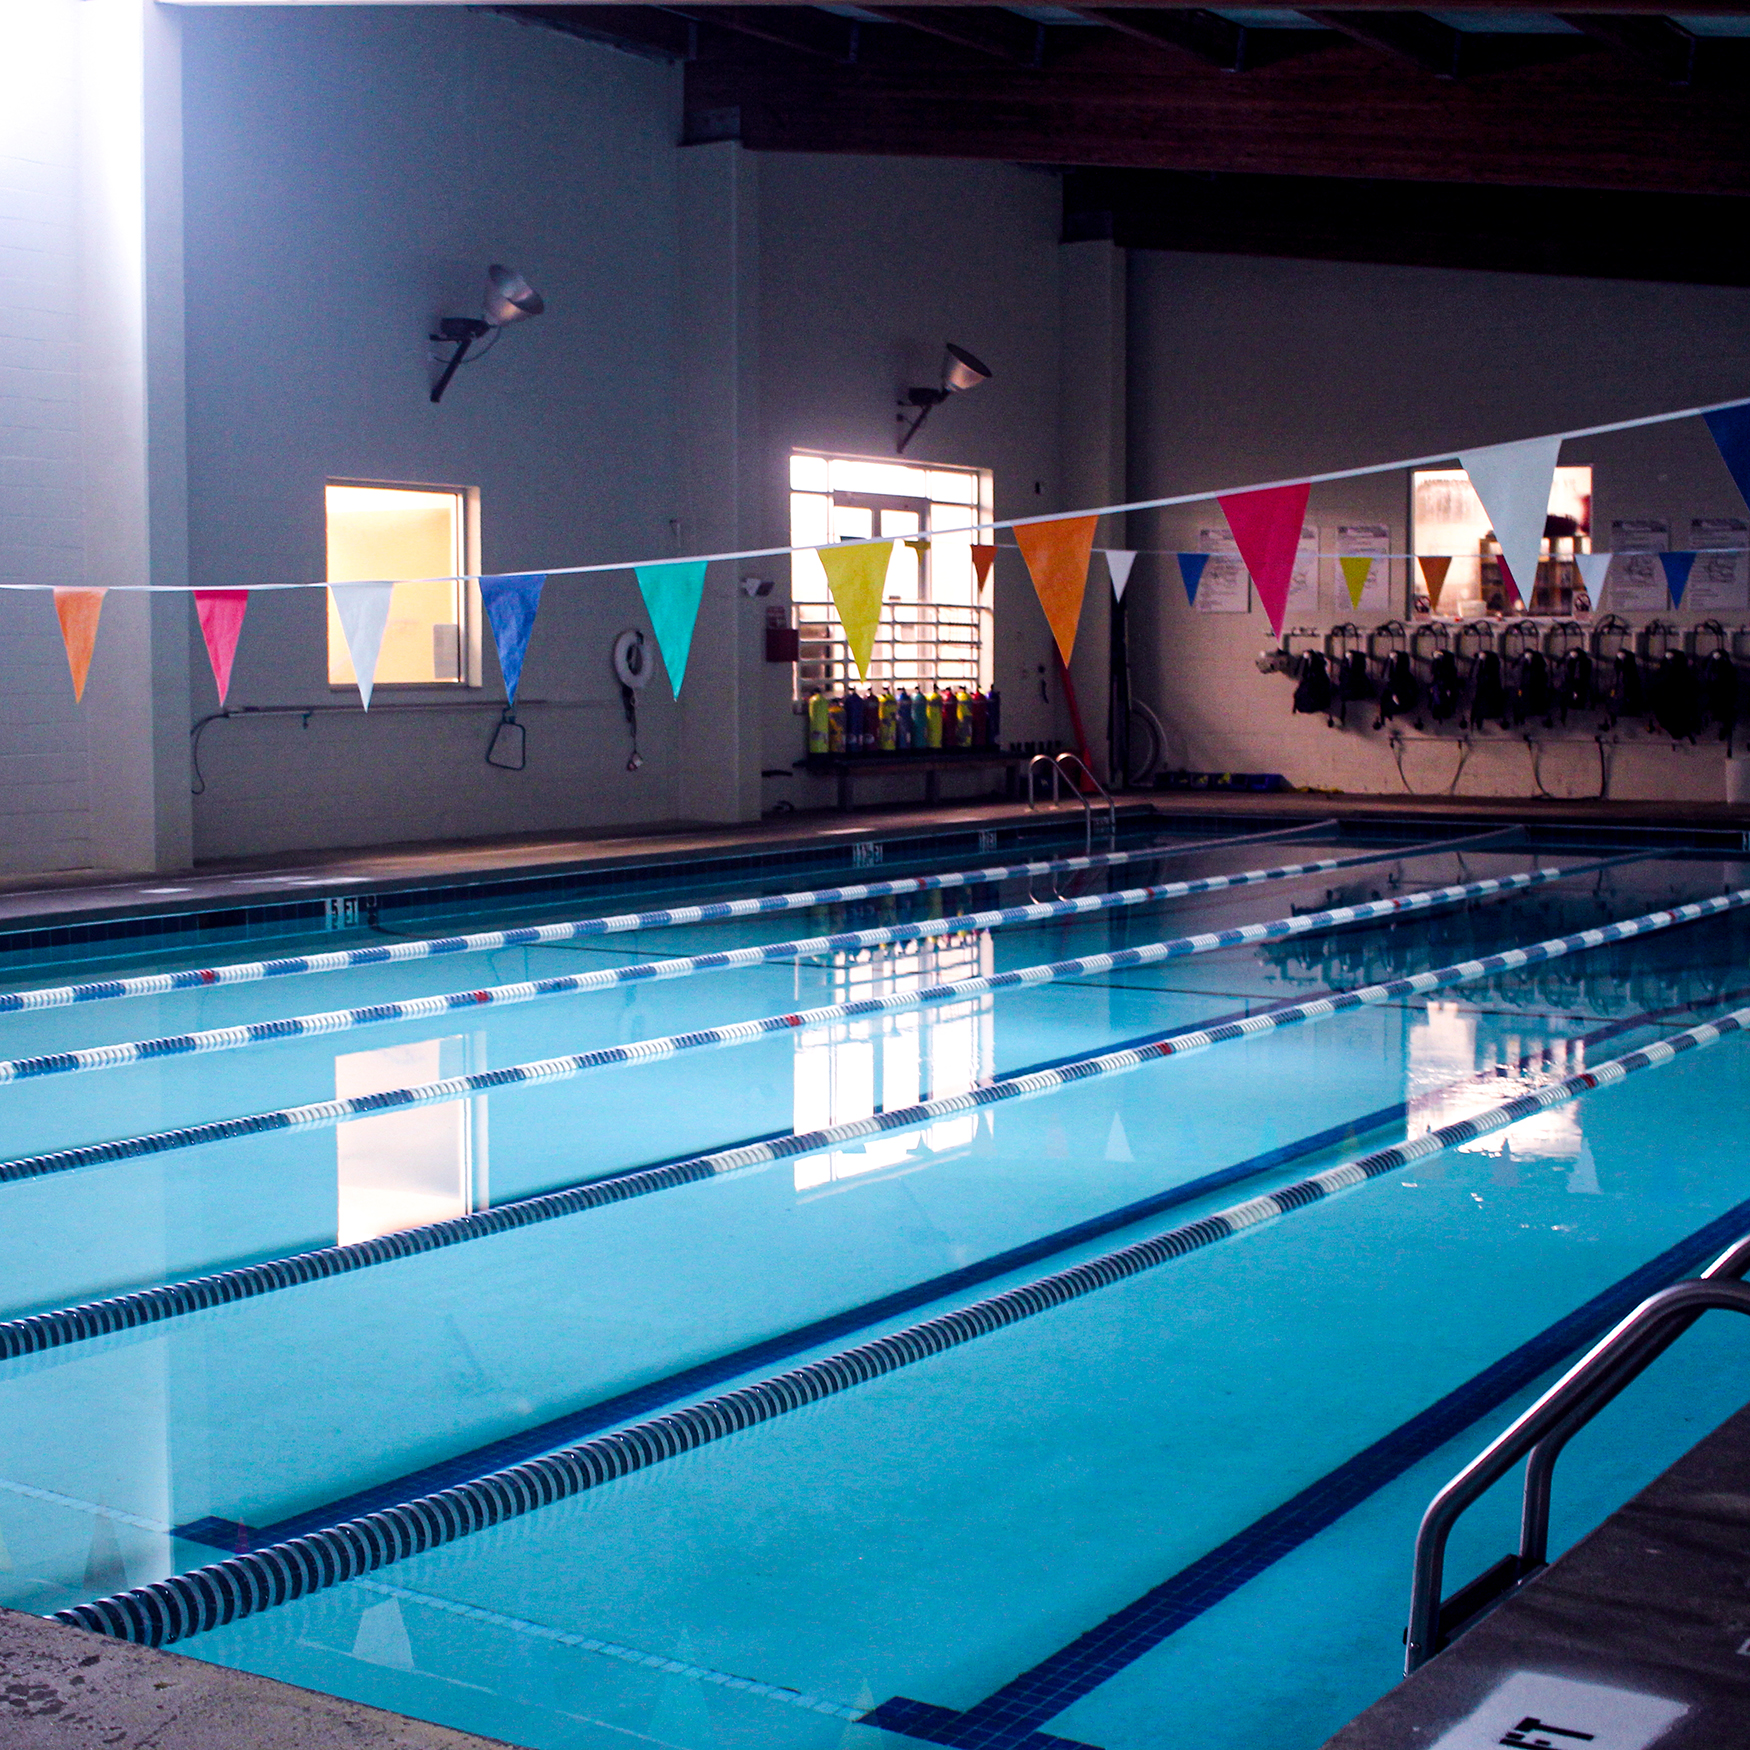 The training pool